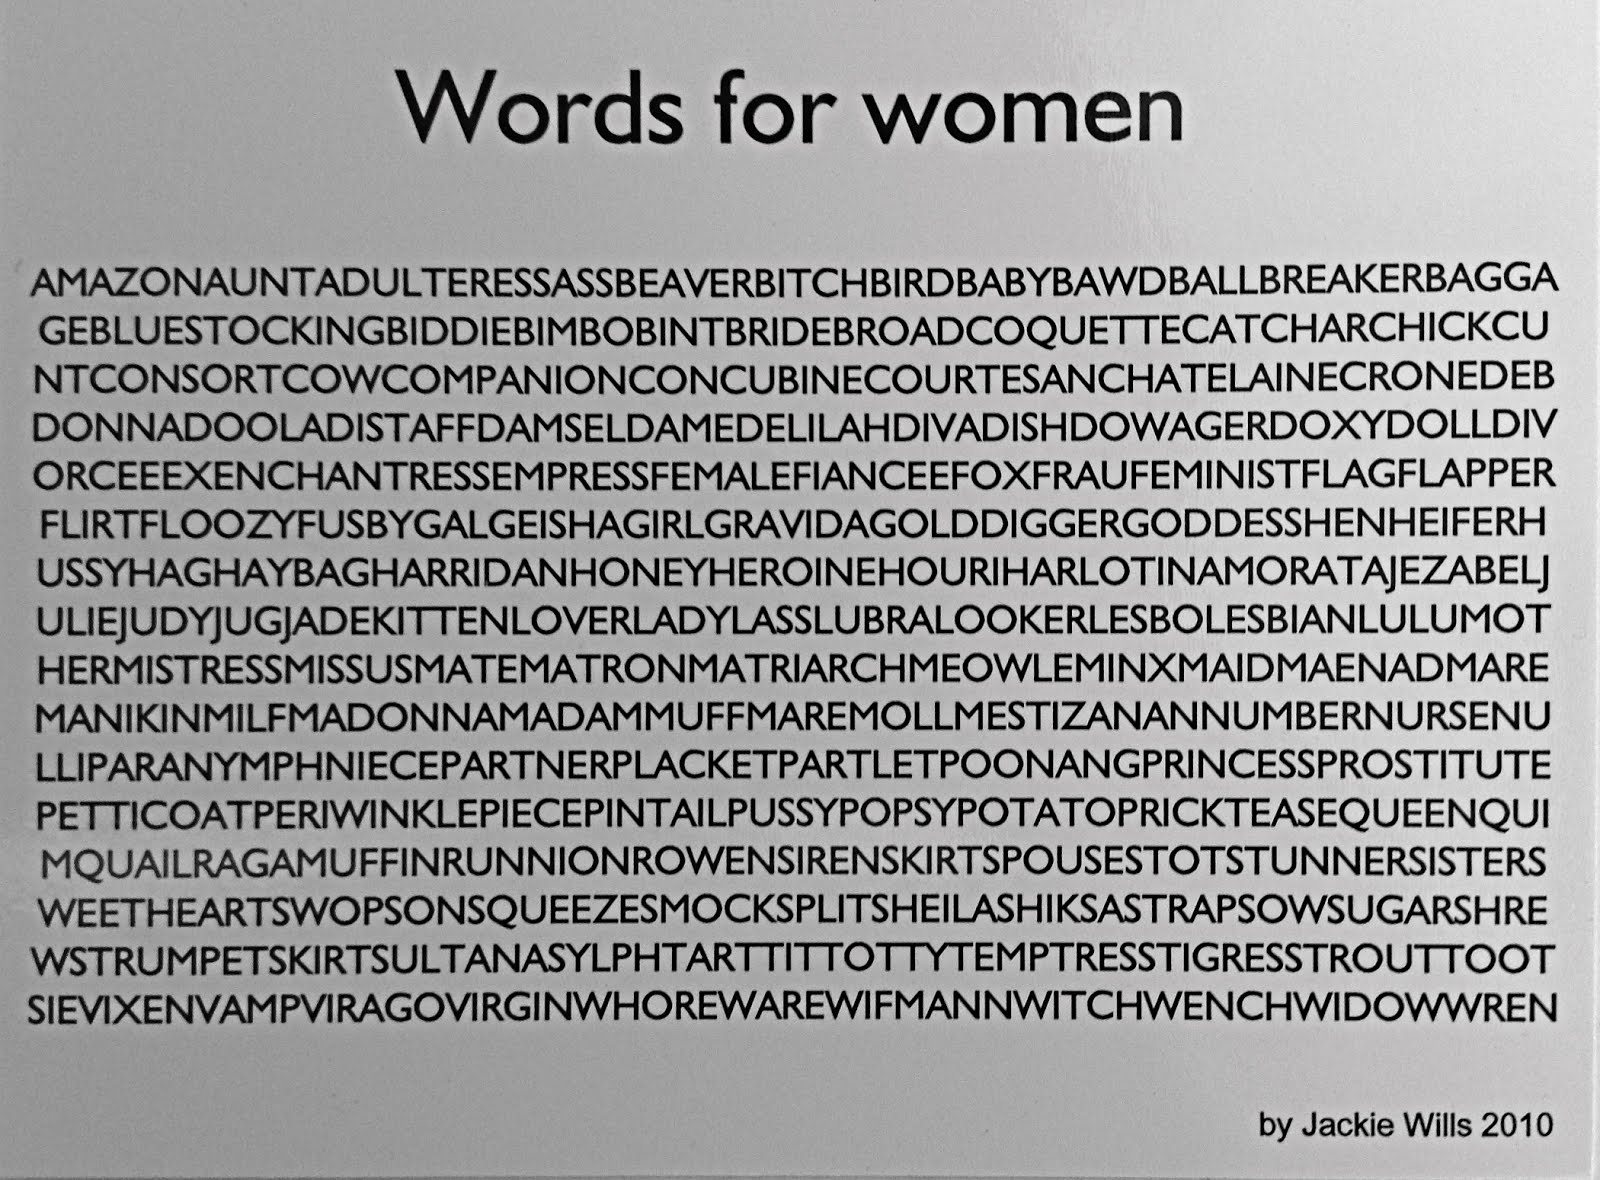 Words for women